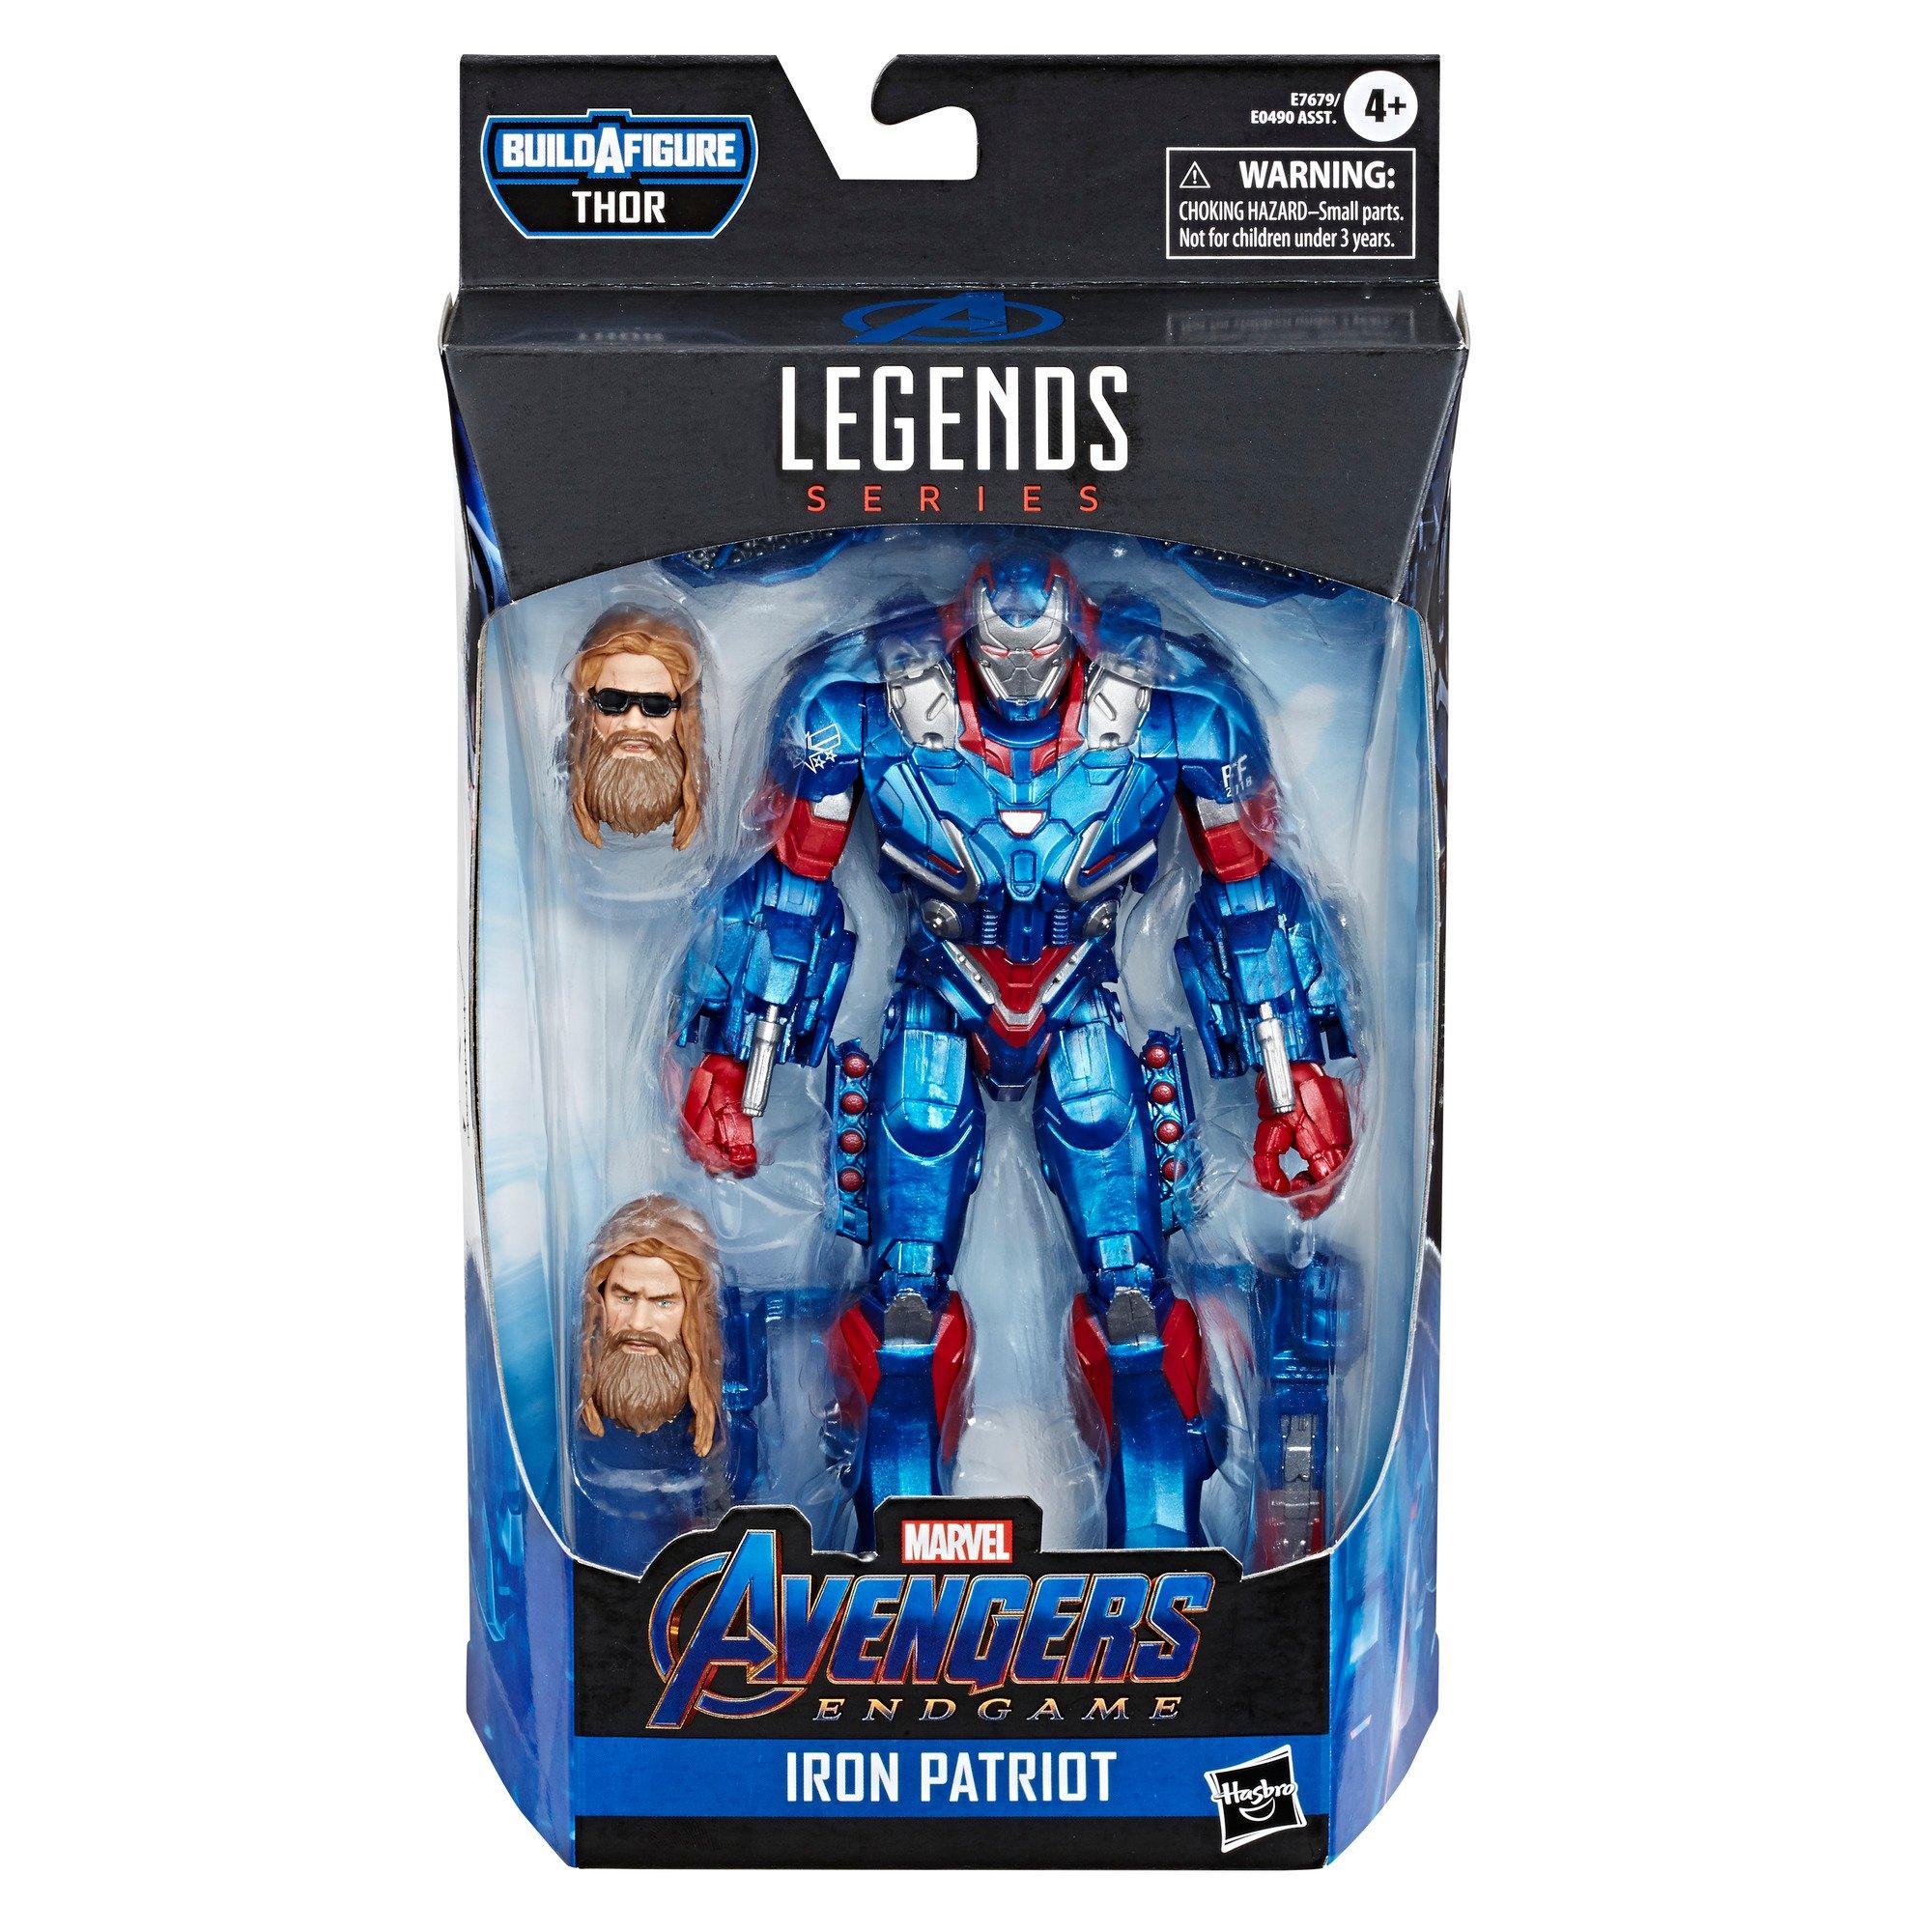 Endgame Avengers Hasbro Marvel Legends Series Iron Patriot Action Figure for sale online 